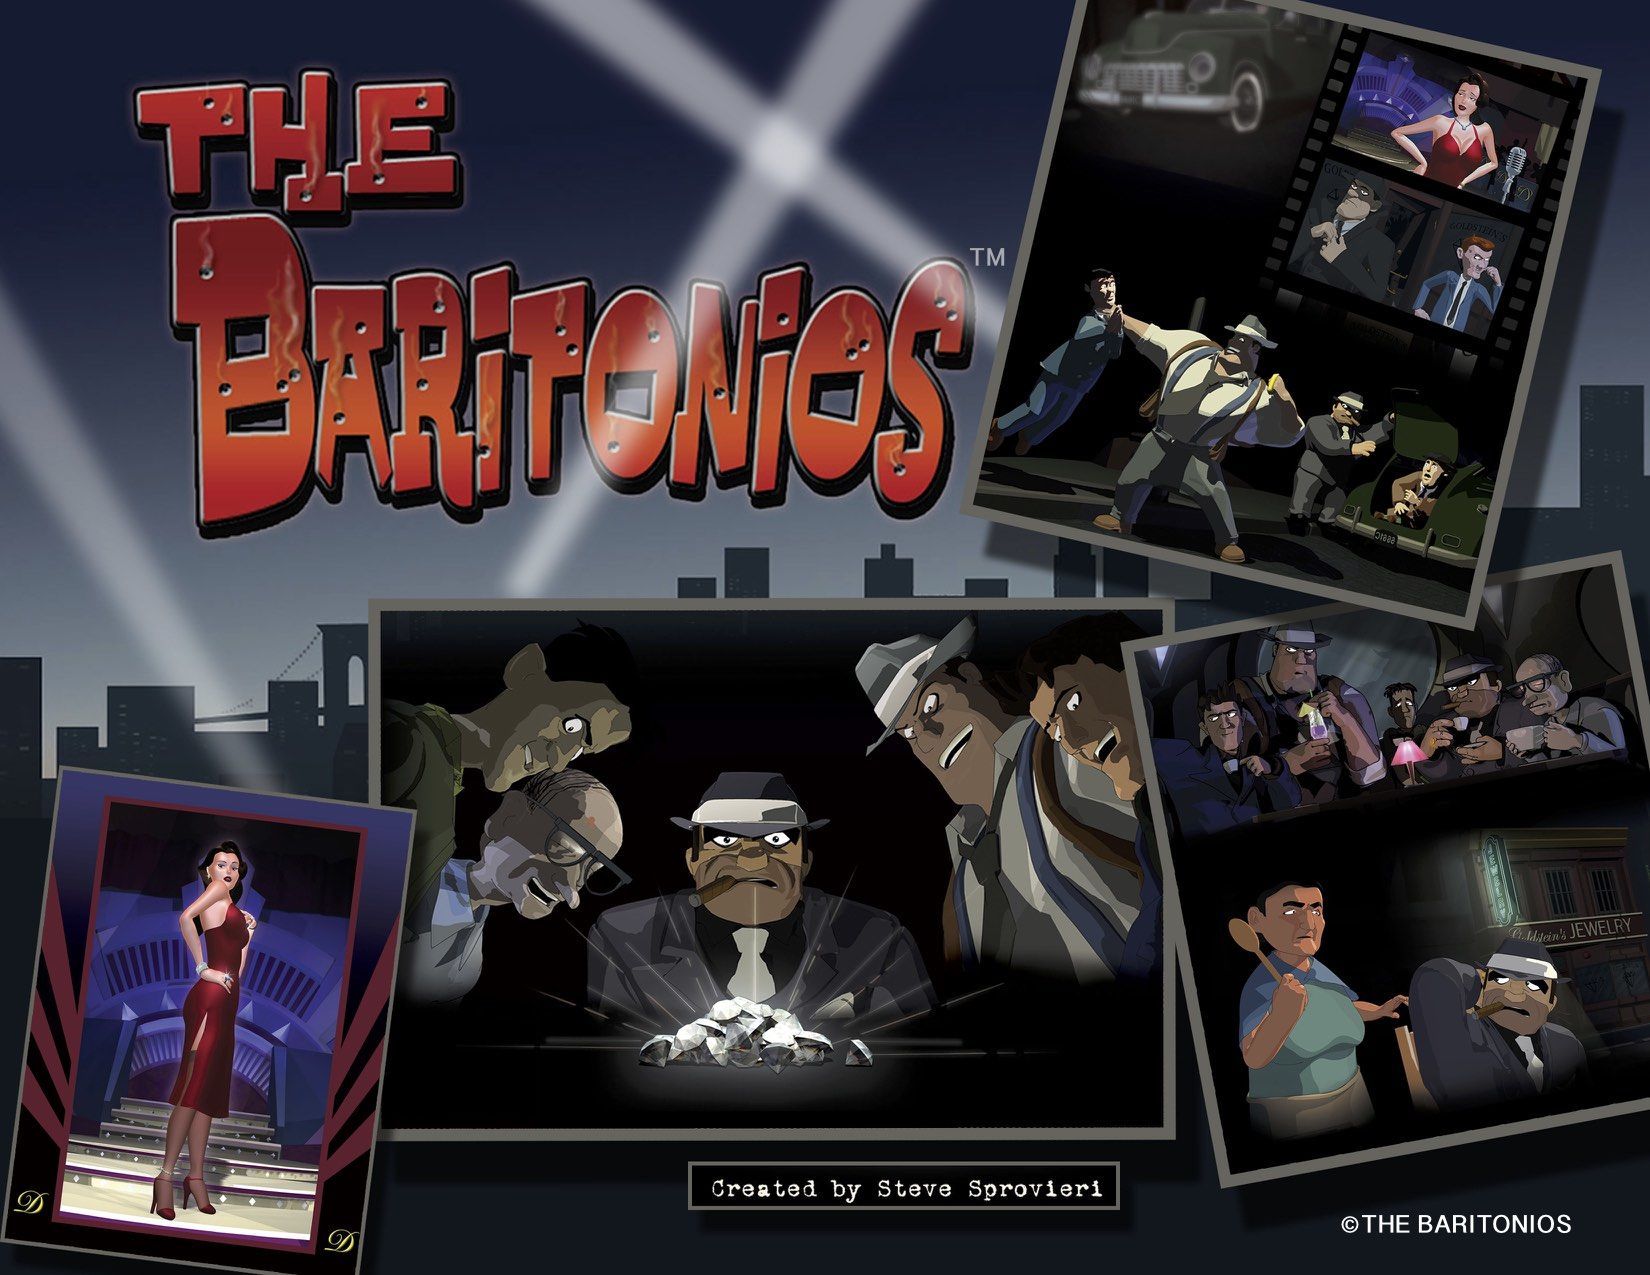 The Baritonios